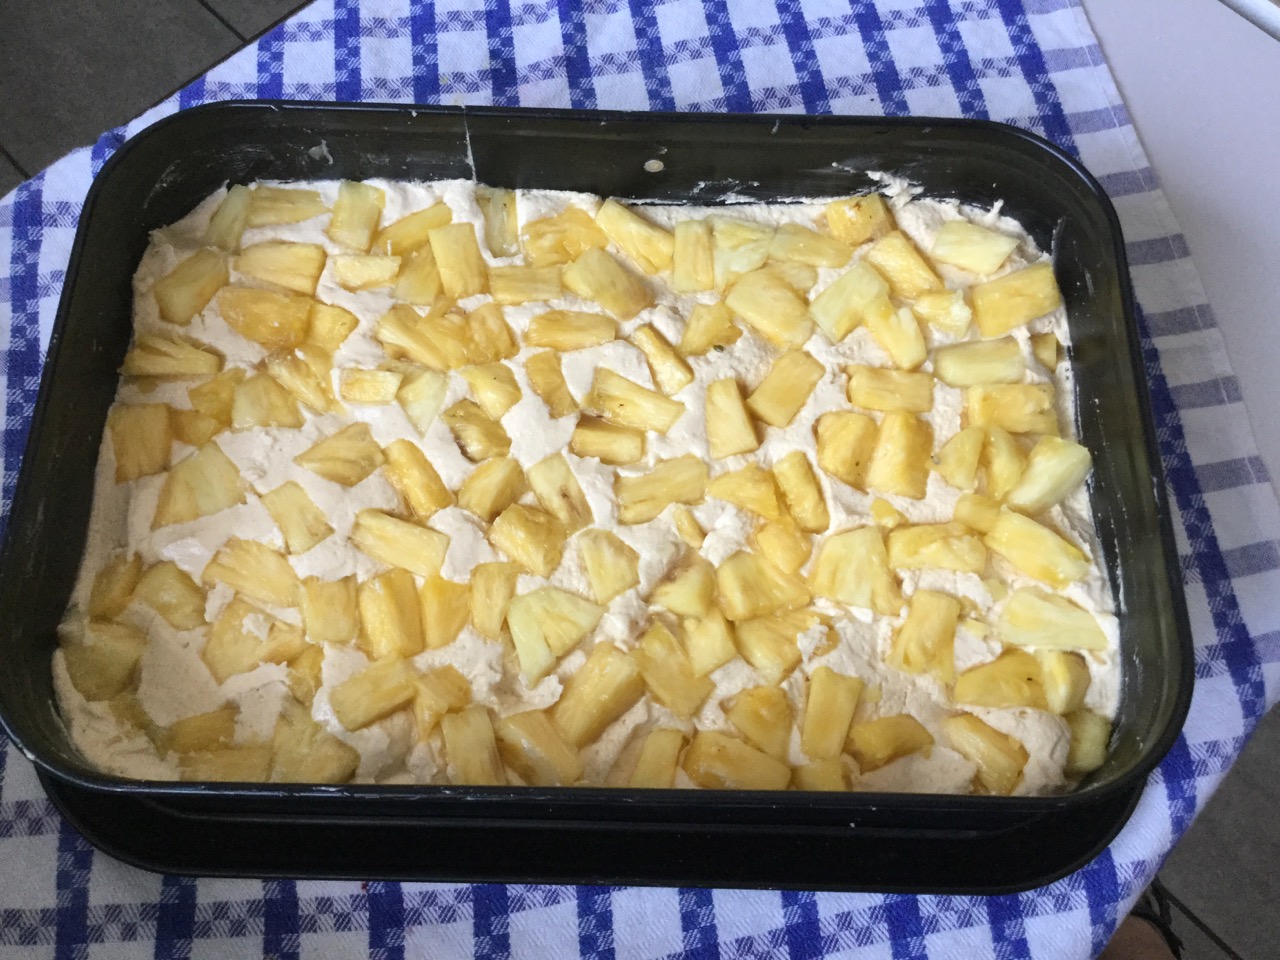 Ananasblechkuchen mit Kokoskruste — Trudels glutenfreies Blog